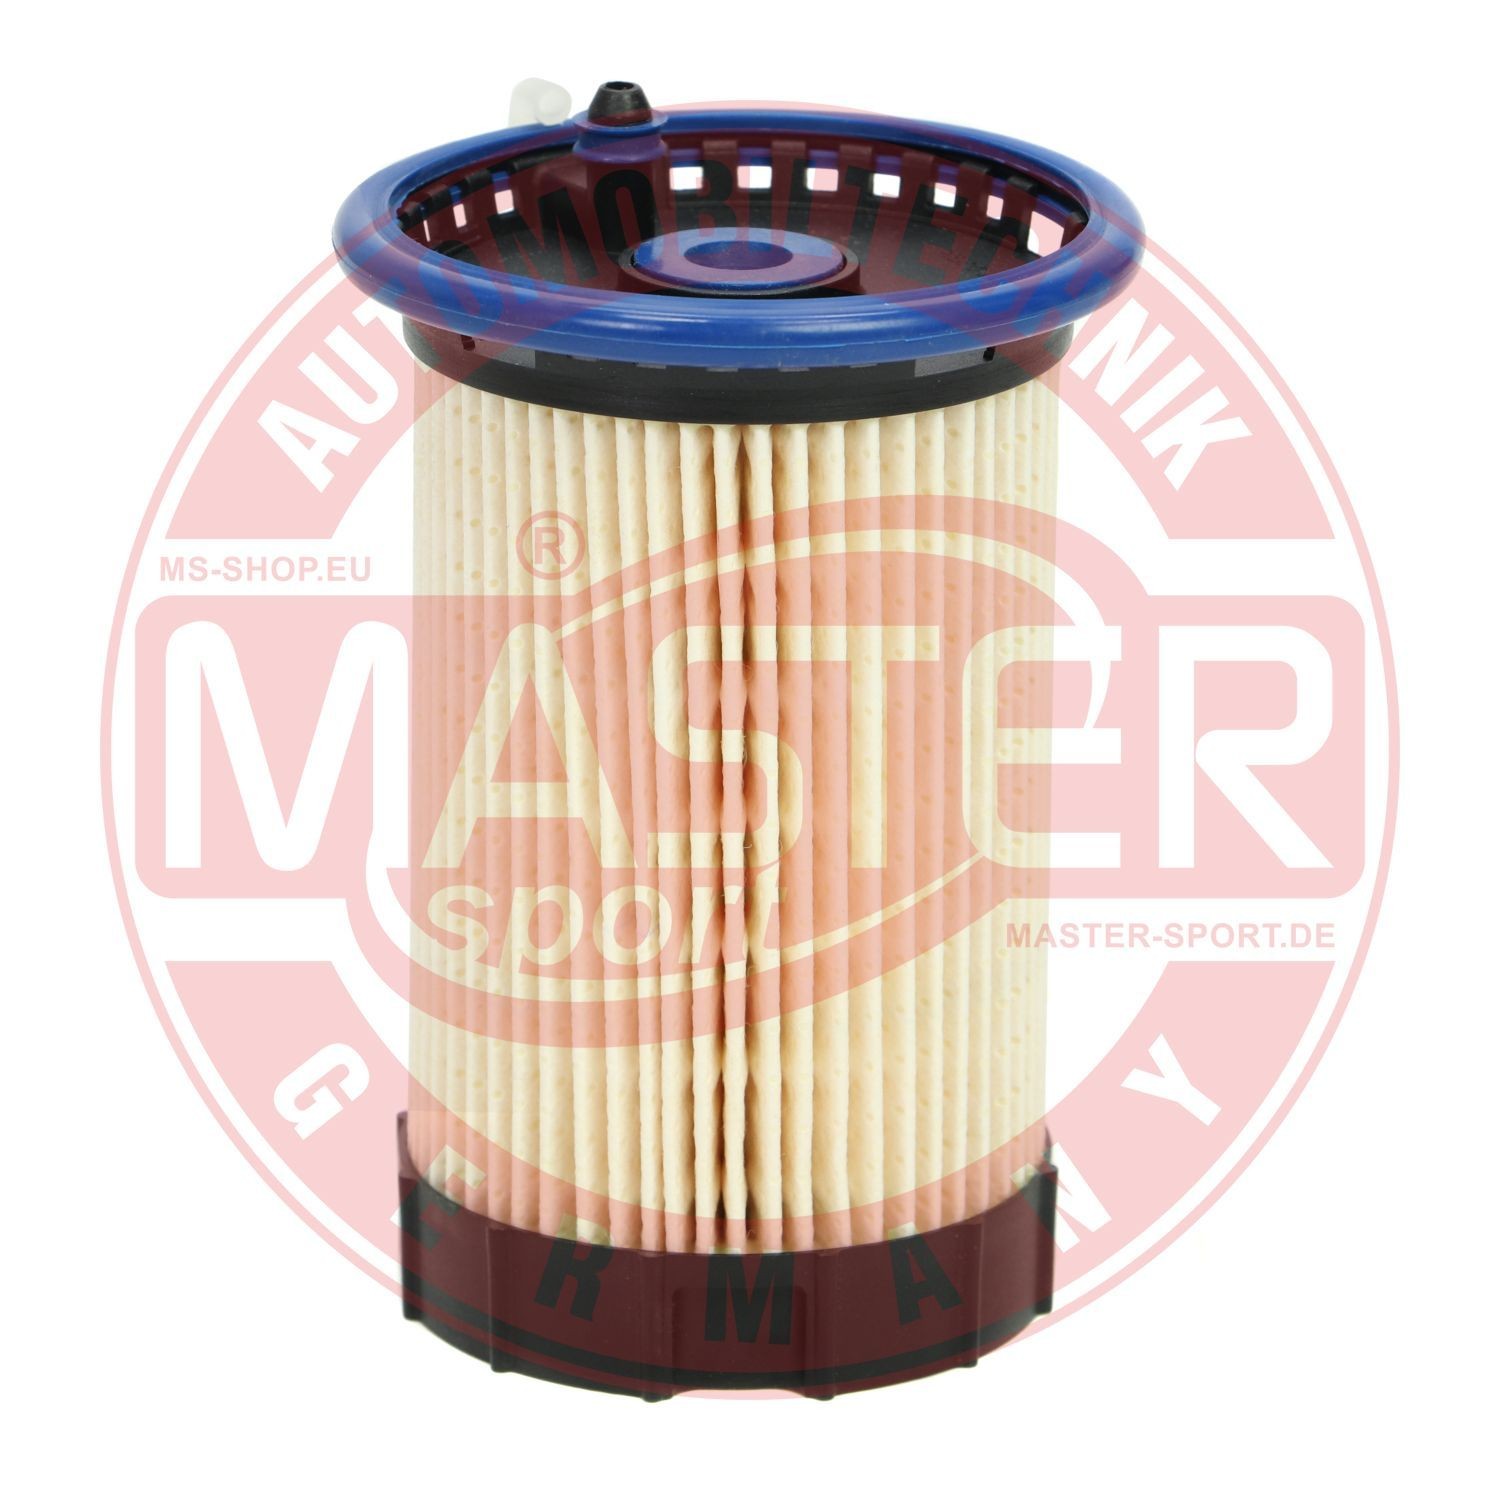 Original 8014-KF-PCS-MS MASTER-SPORT Fuel filter PORSCHE